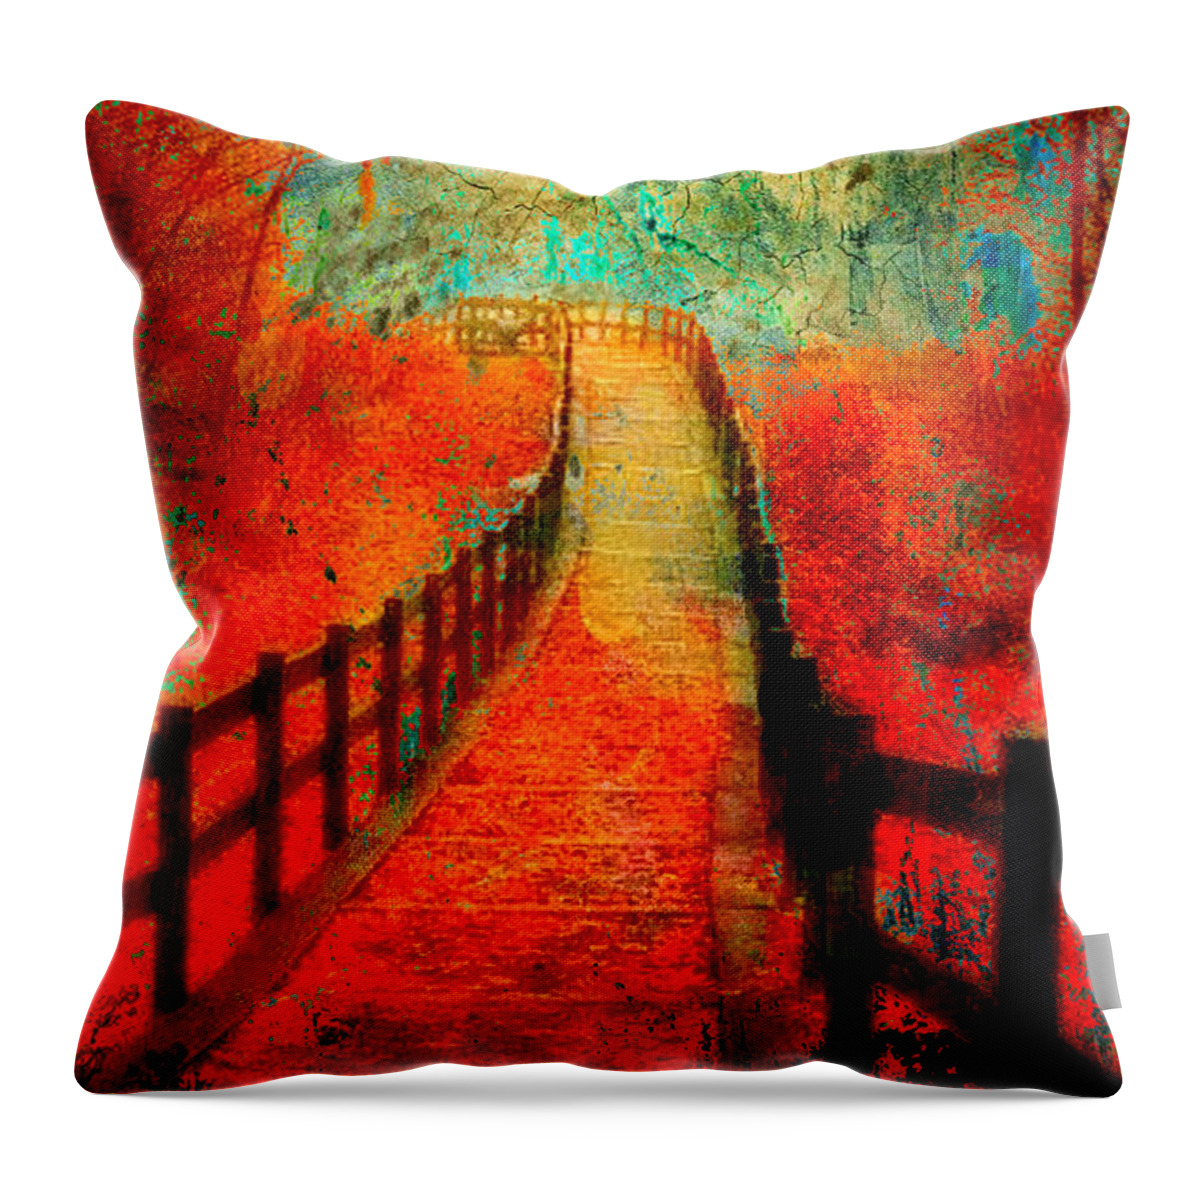 Bridge Throw Pillow featuring the digital art Wander Bridge by Greg Sharpe